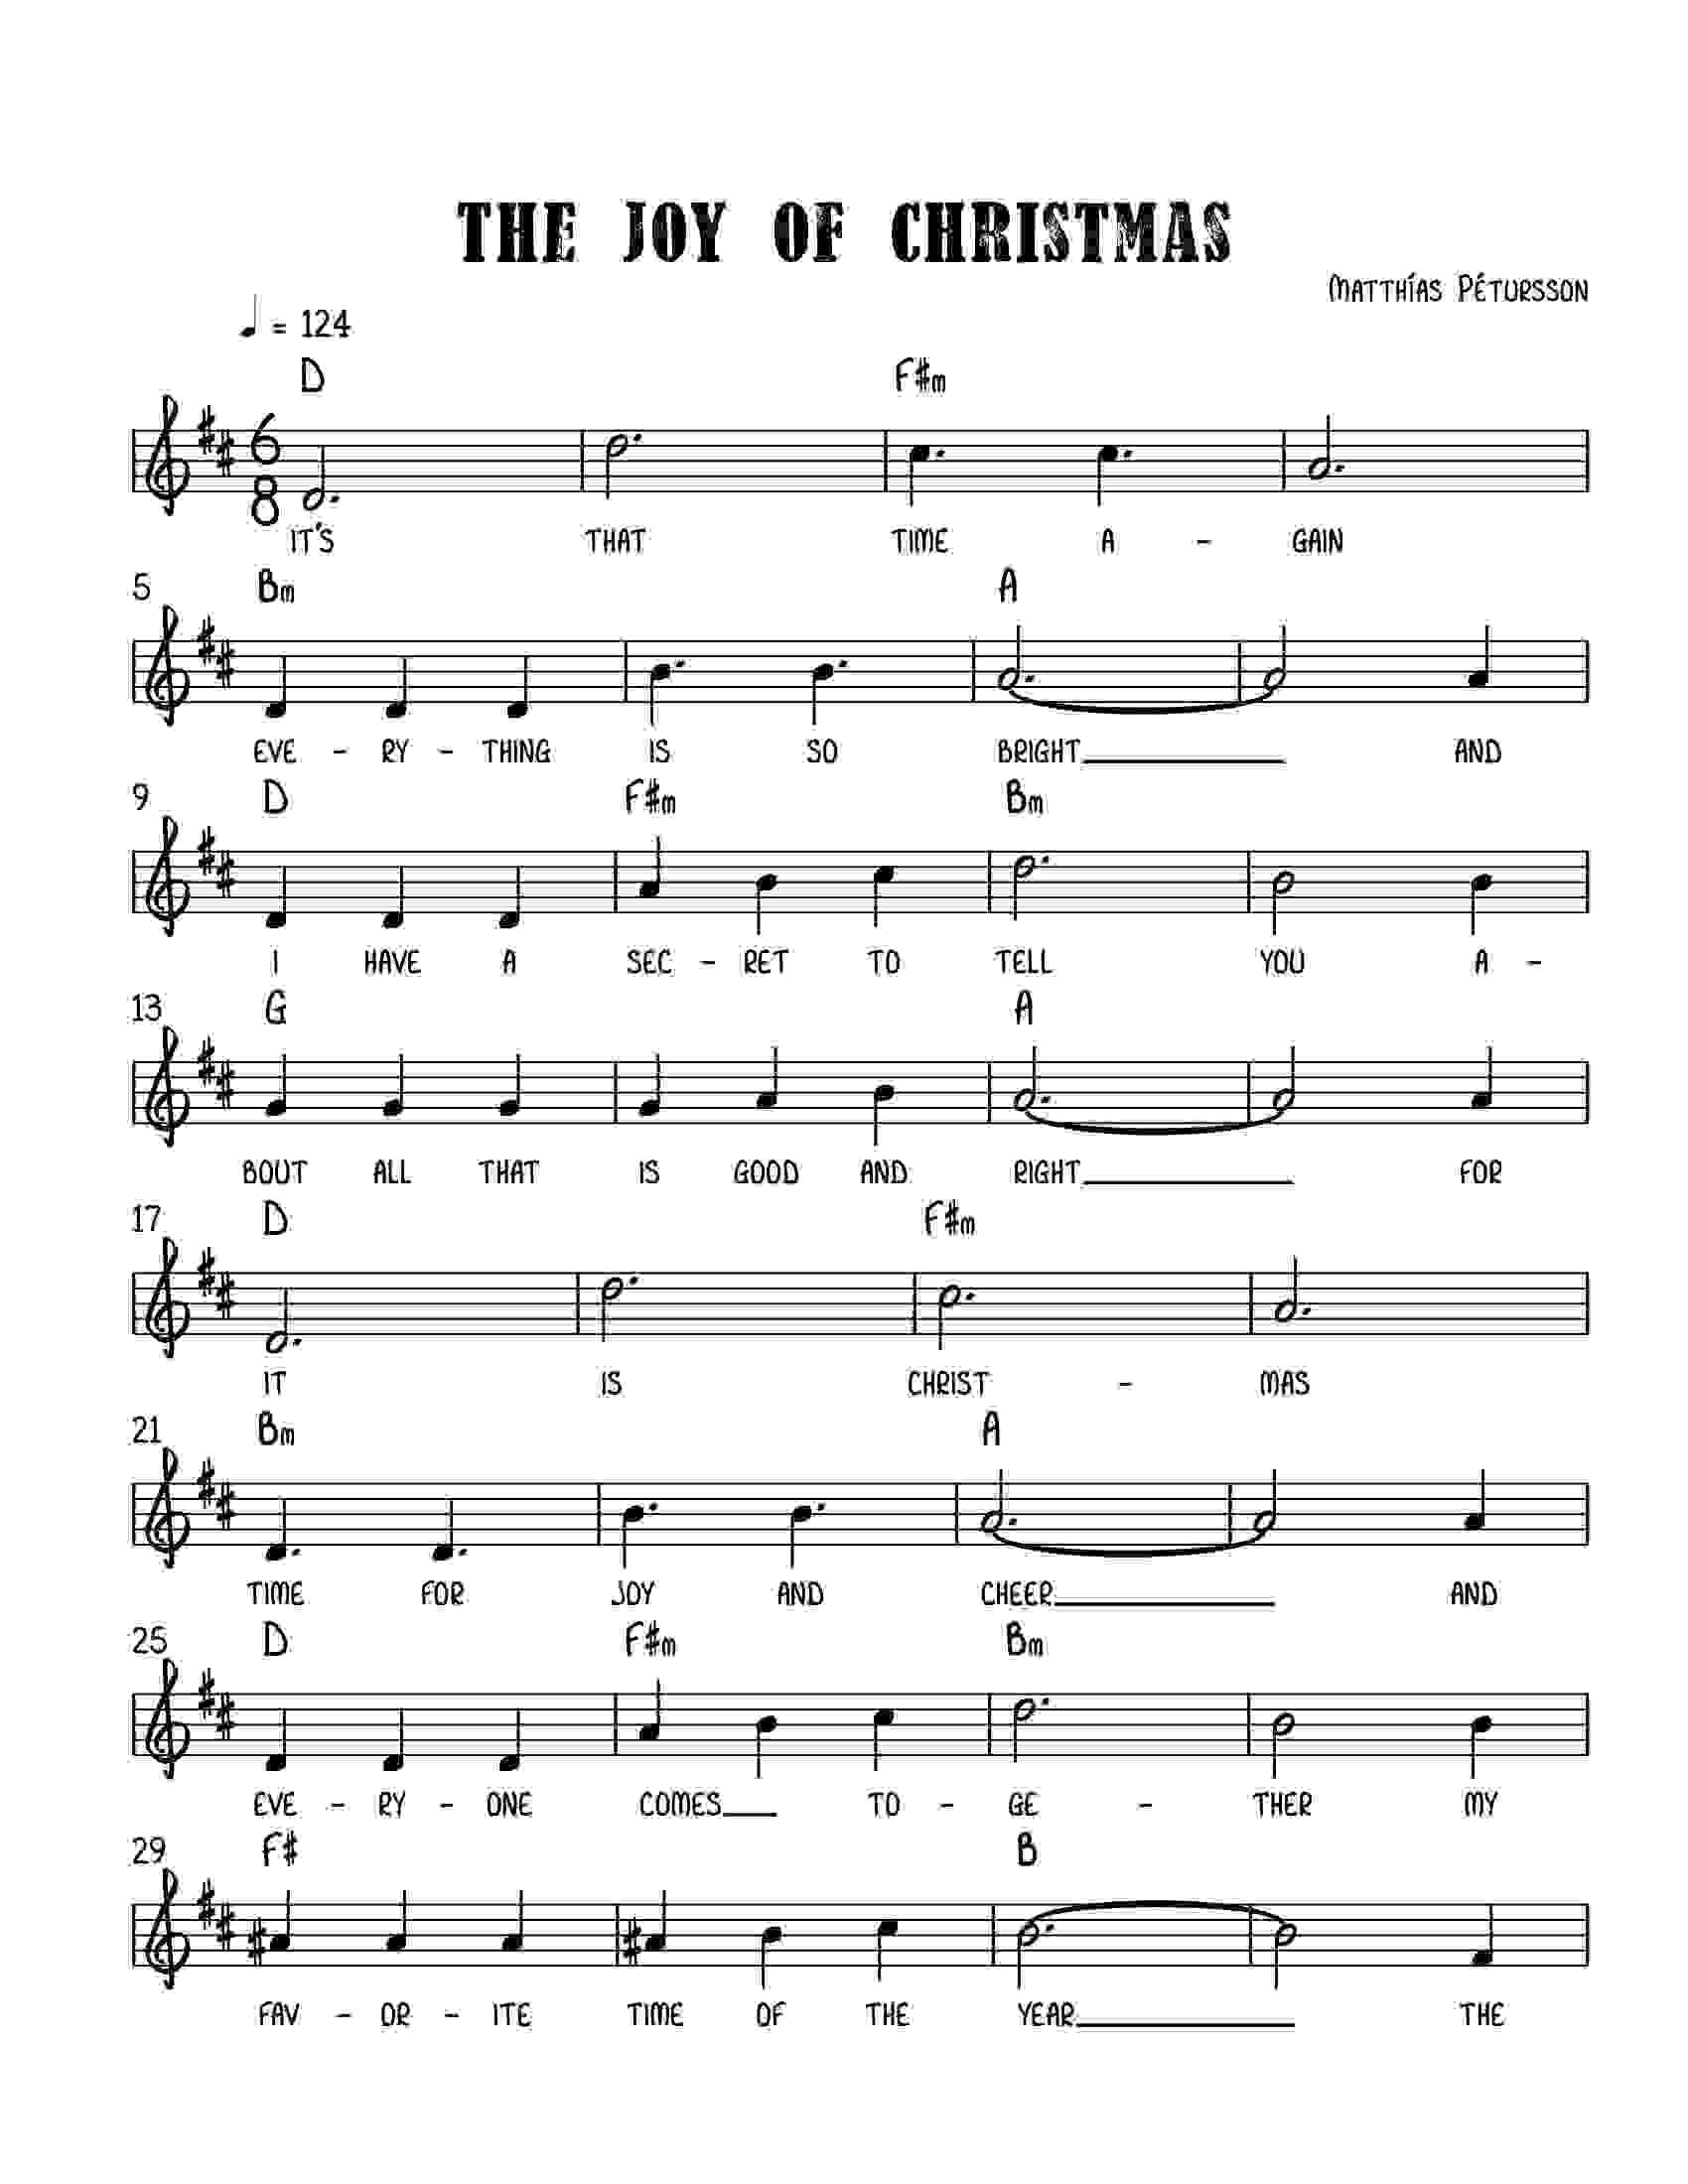 The Joy Of Christmas sheet music